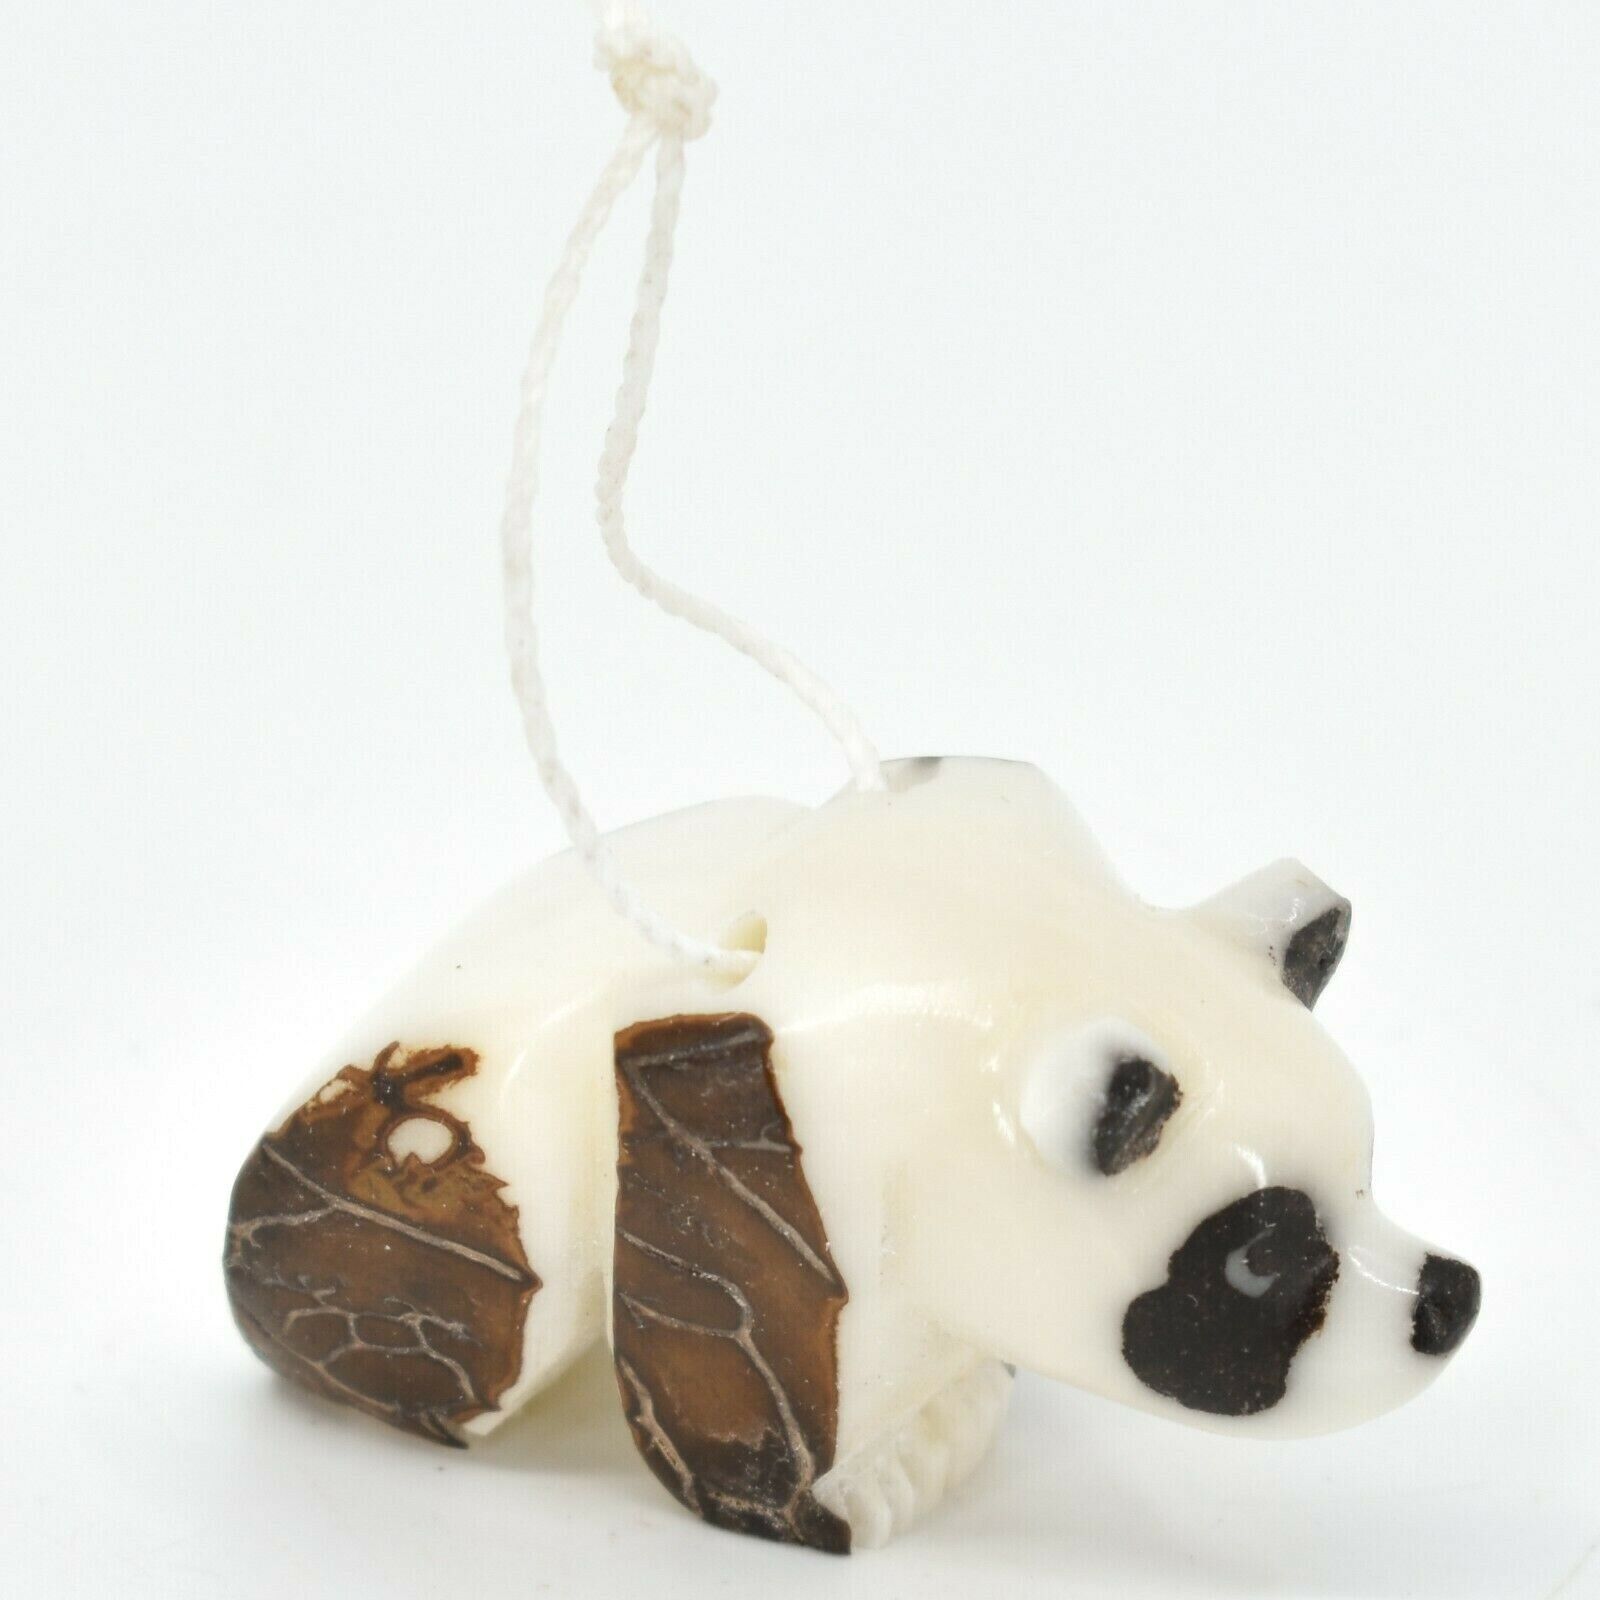 Hand Carved Tagua Nut Carving Small Panda Bear Ornament Handmade in Ecuador